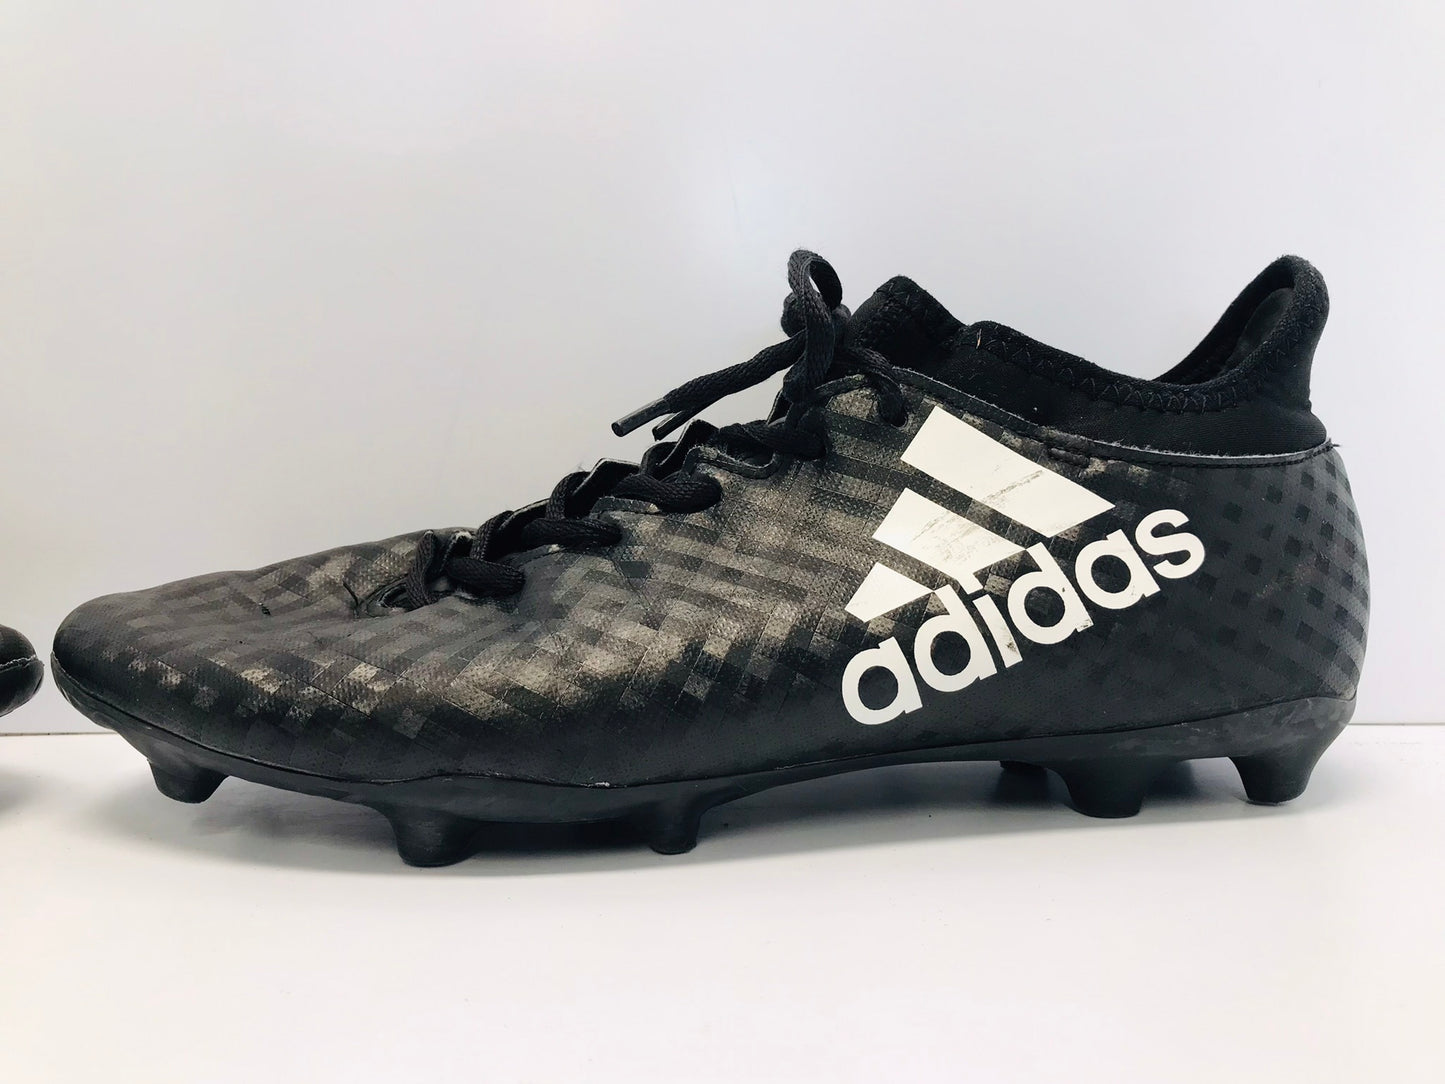 Soccer Shoes Cleats Men's Size 11 Adidas x Techfit  Black Slipper Foot